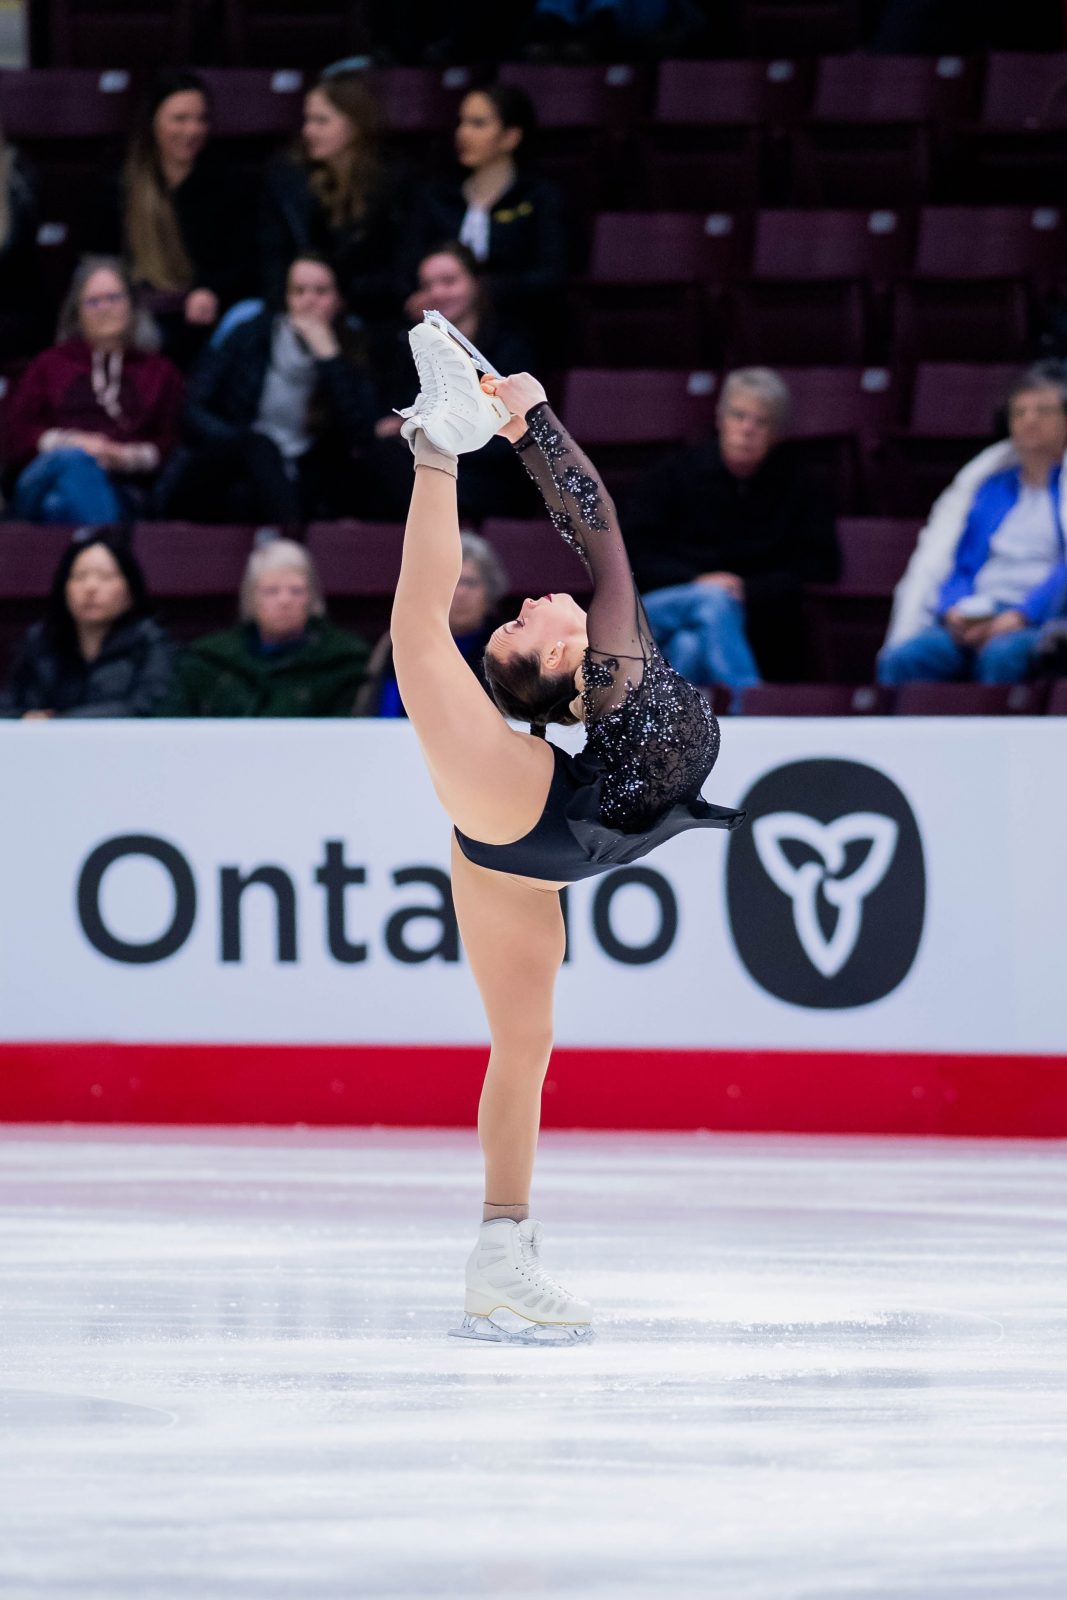 Championnats canadiens : Alicia Pineault termine quatrième